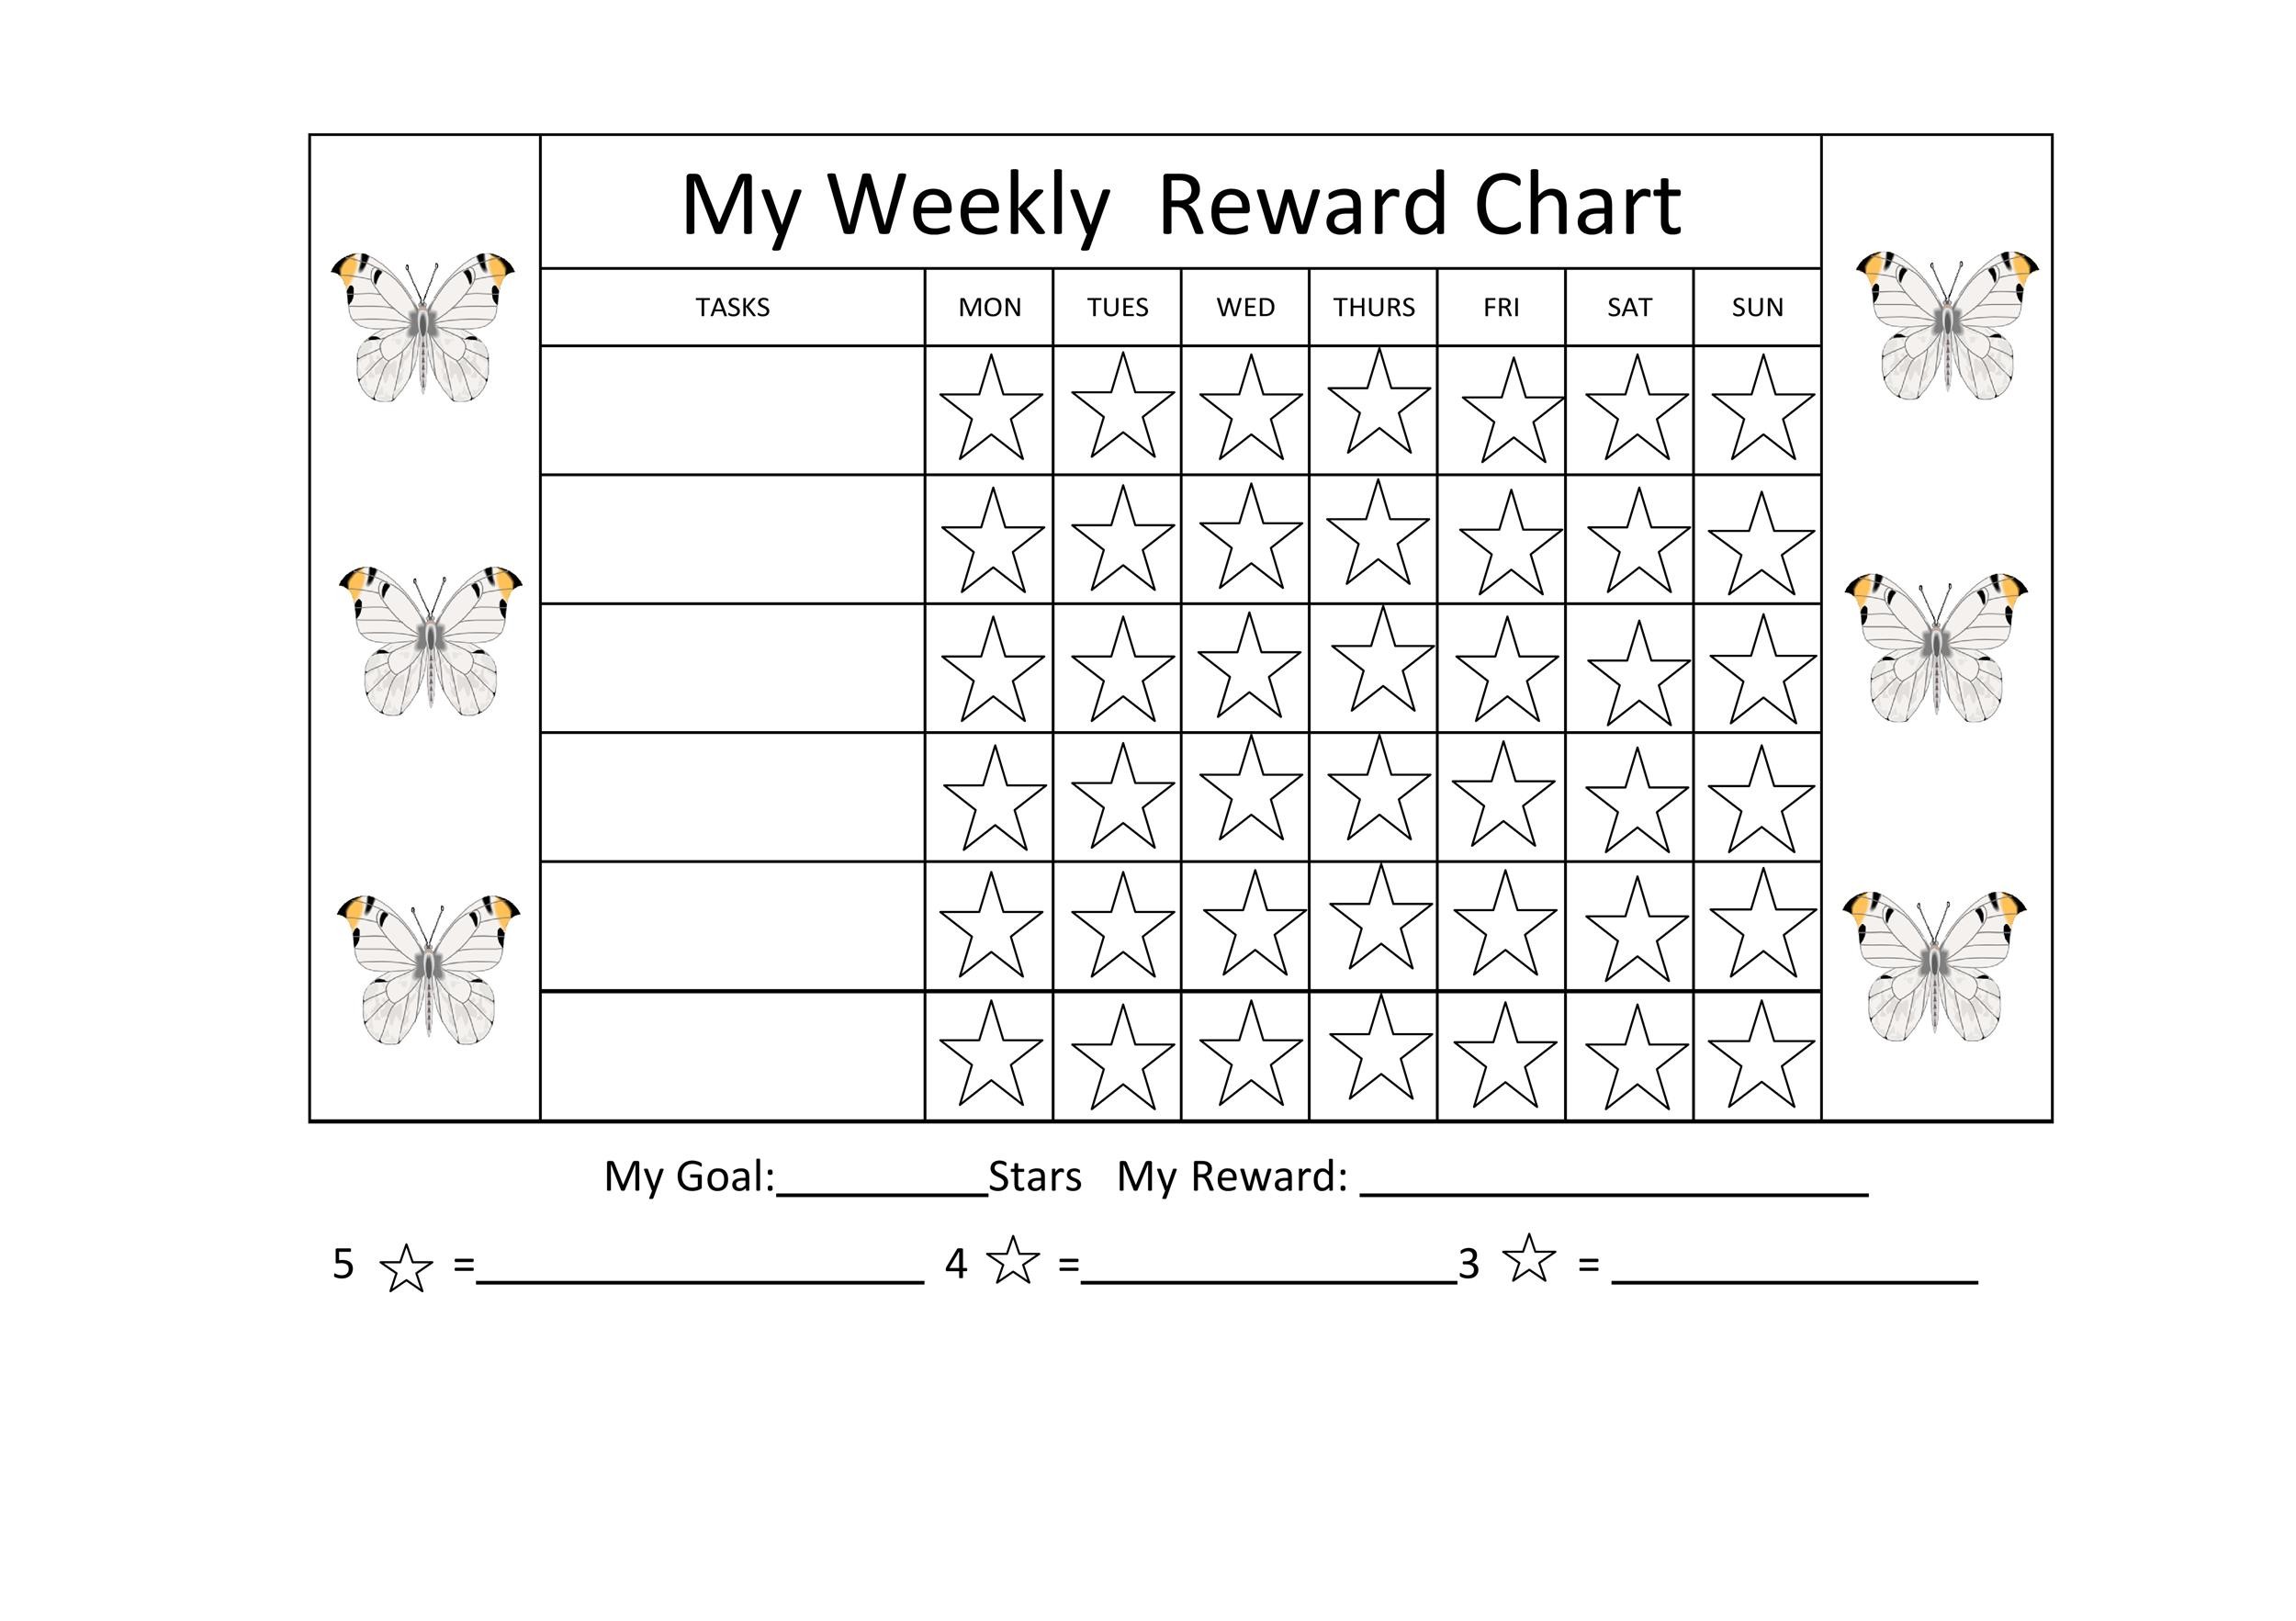 Daily Behavior Chart Template